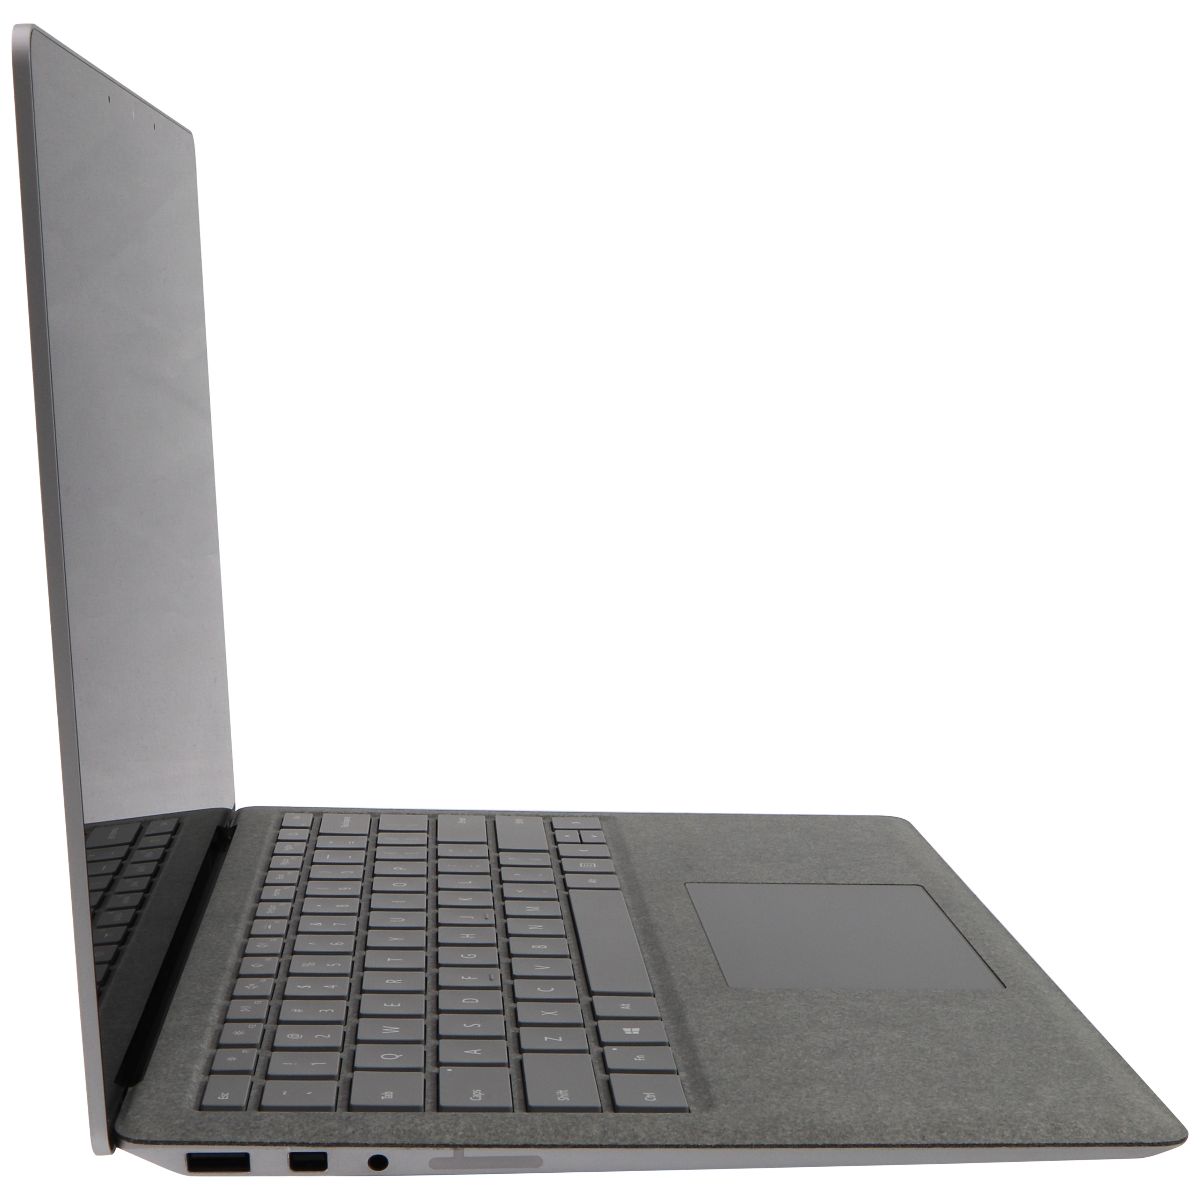 Microsoft Surface Laptop 2 (13.5-in) 1769 (i7-8650U / 1 TB / 16GB) - Platinum Laptops - PC Laptops & Netbooks Microsoft    - Simple Cell Bulk Wholesale Pricing - USA Seller